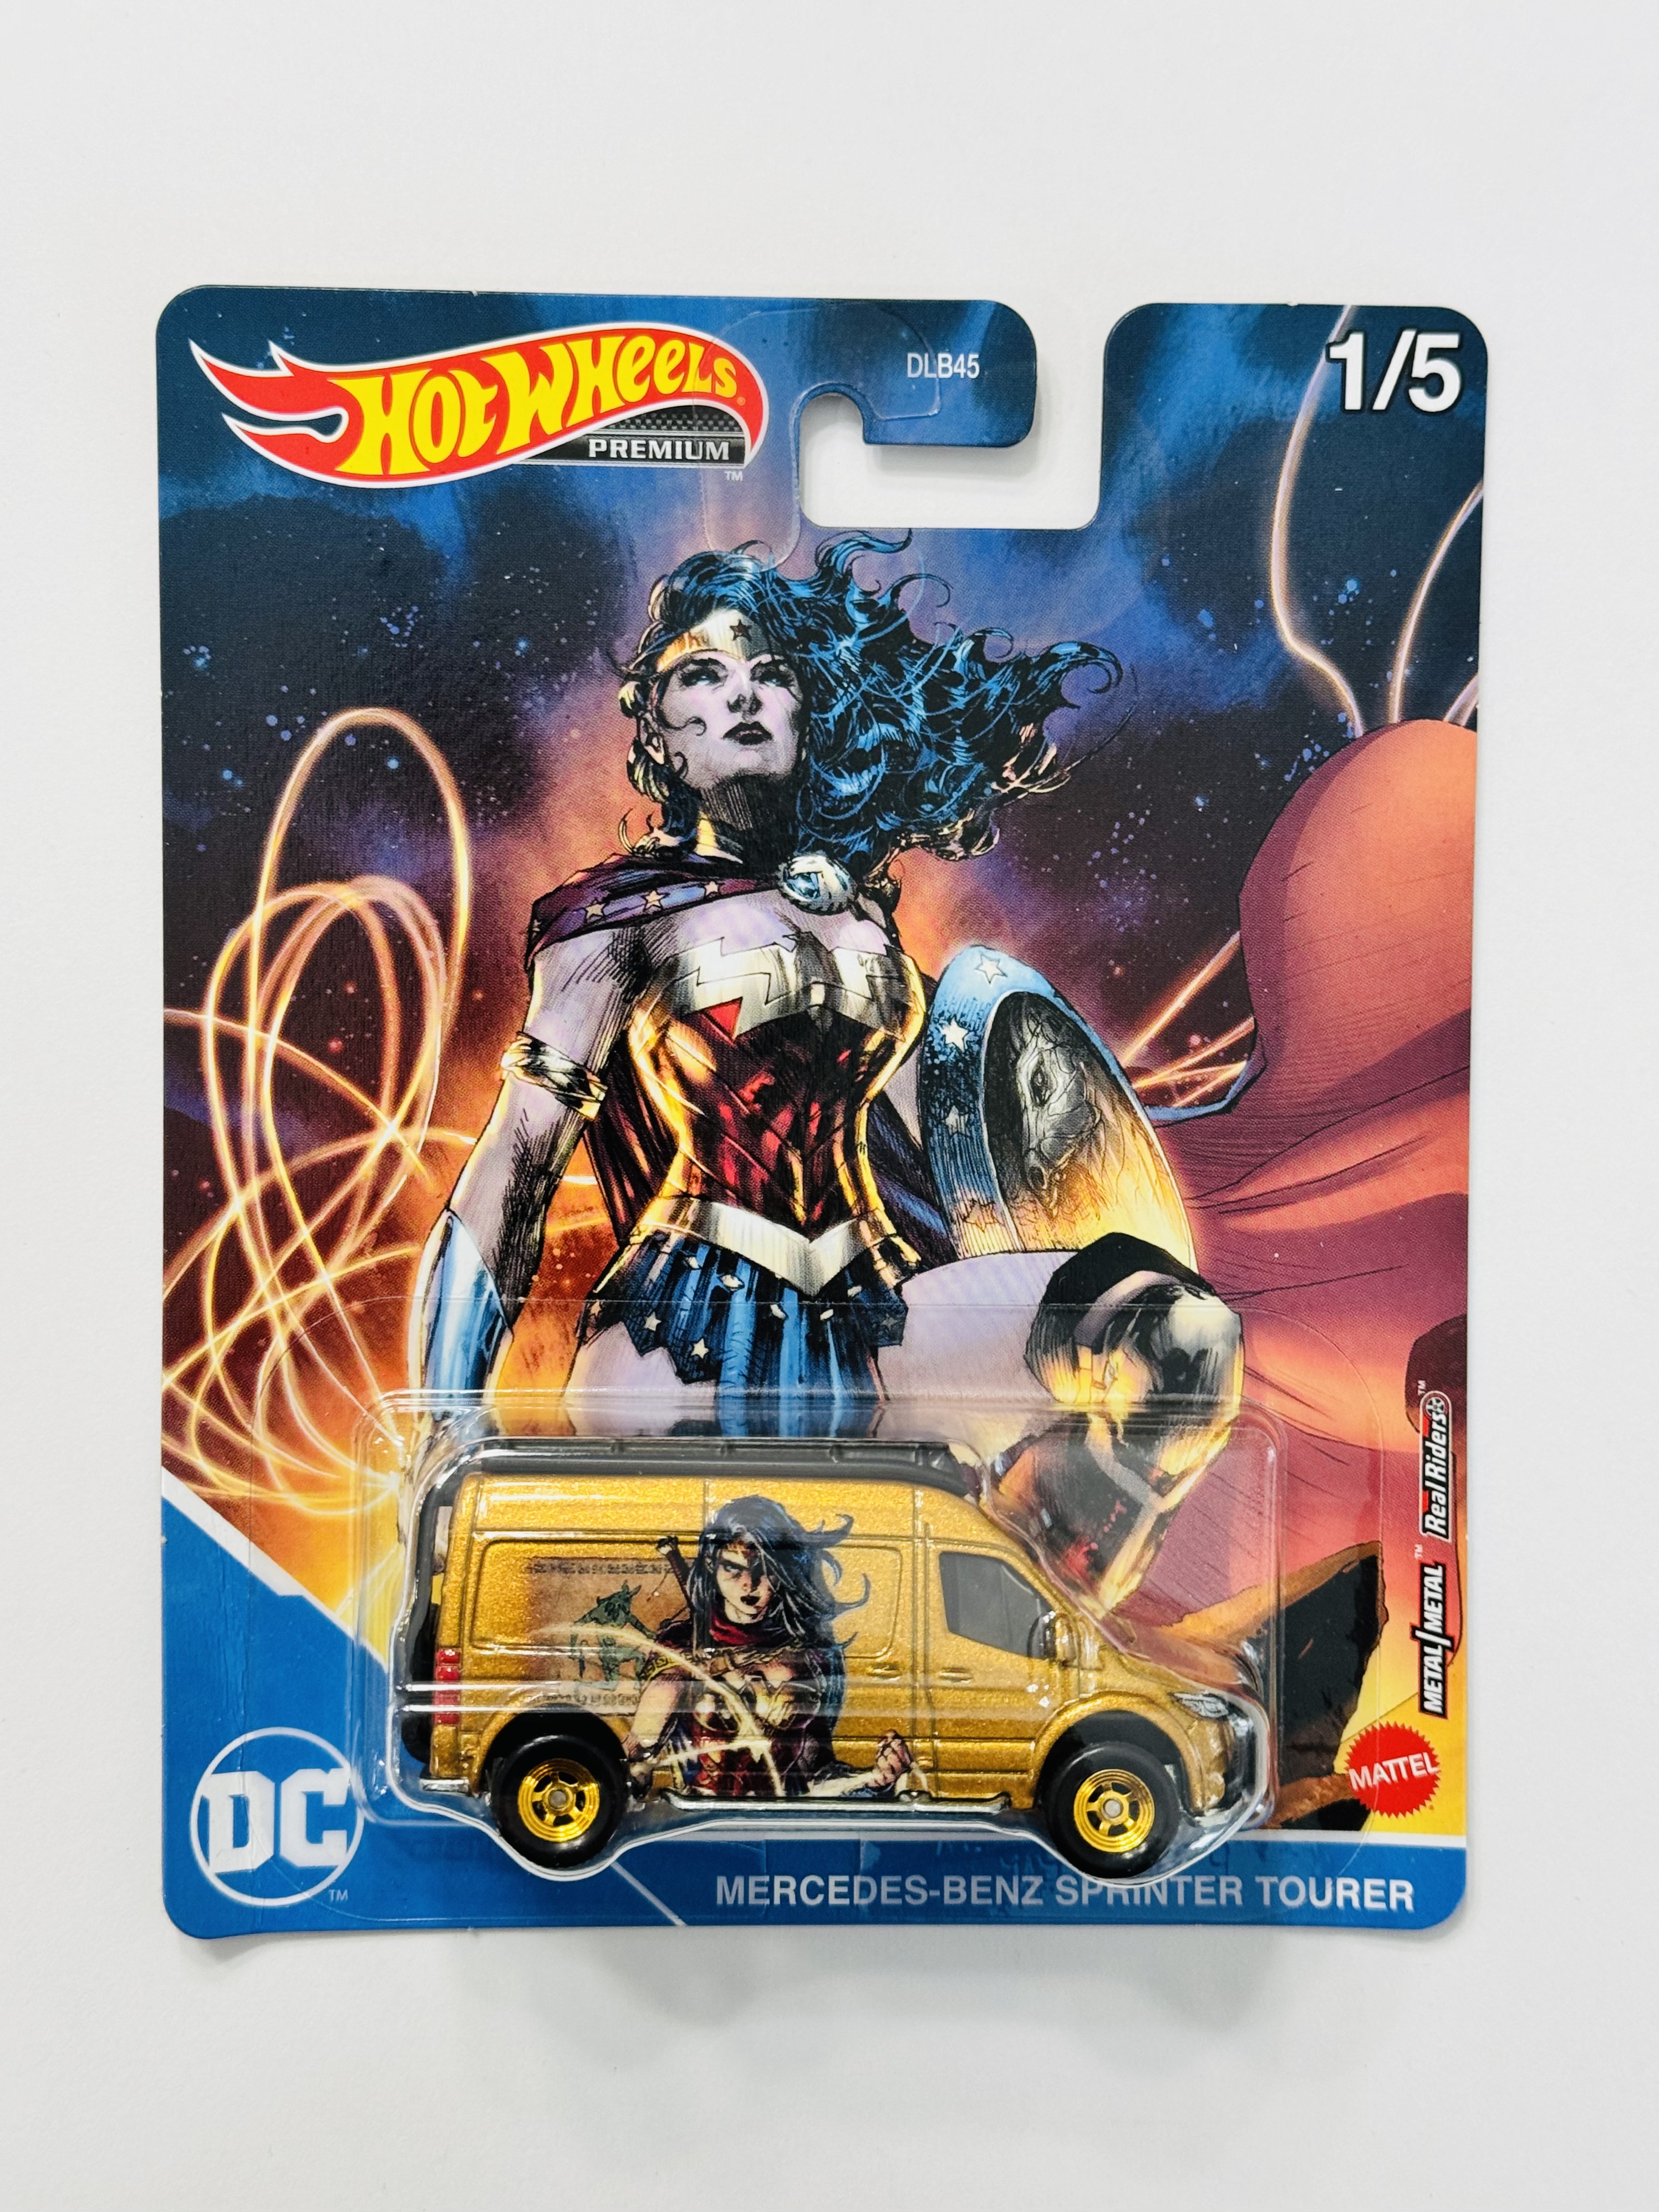 Hot Wheels Premium DC Comics Wonder Woman Mercedes-Benz Sprinter Tourer